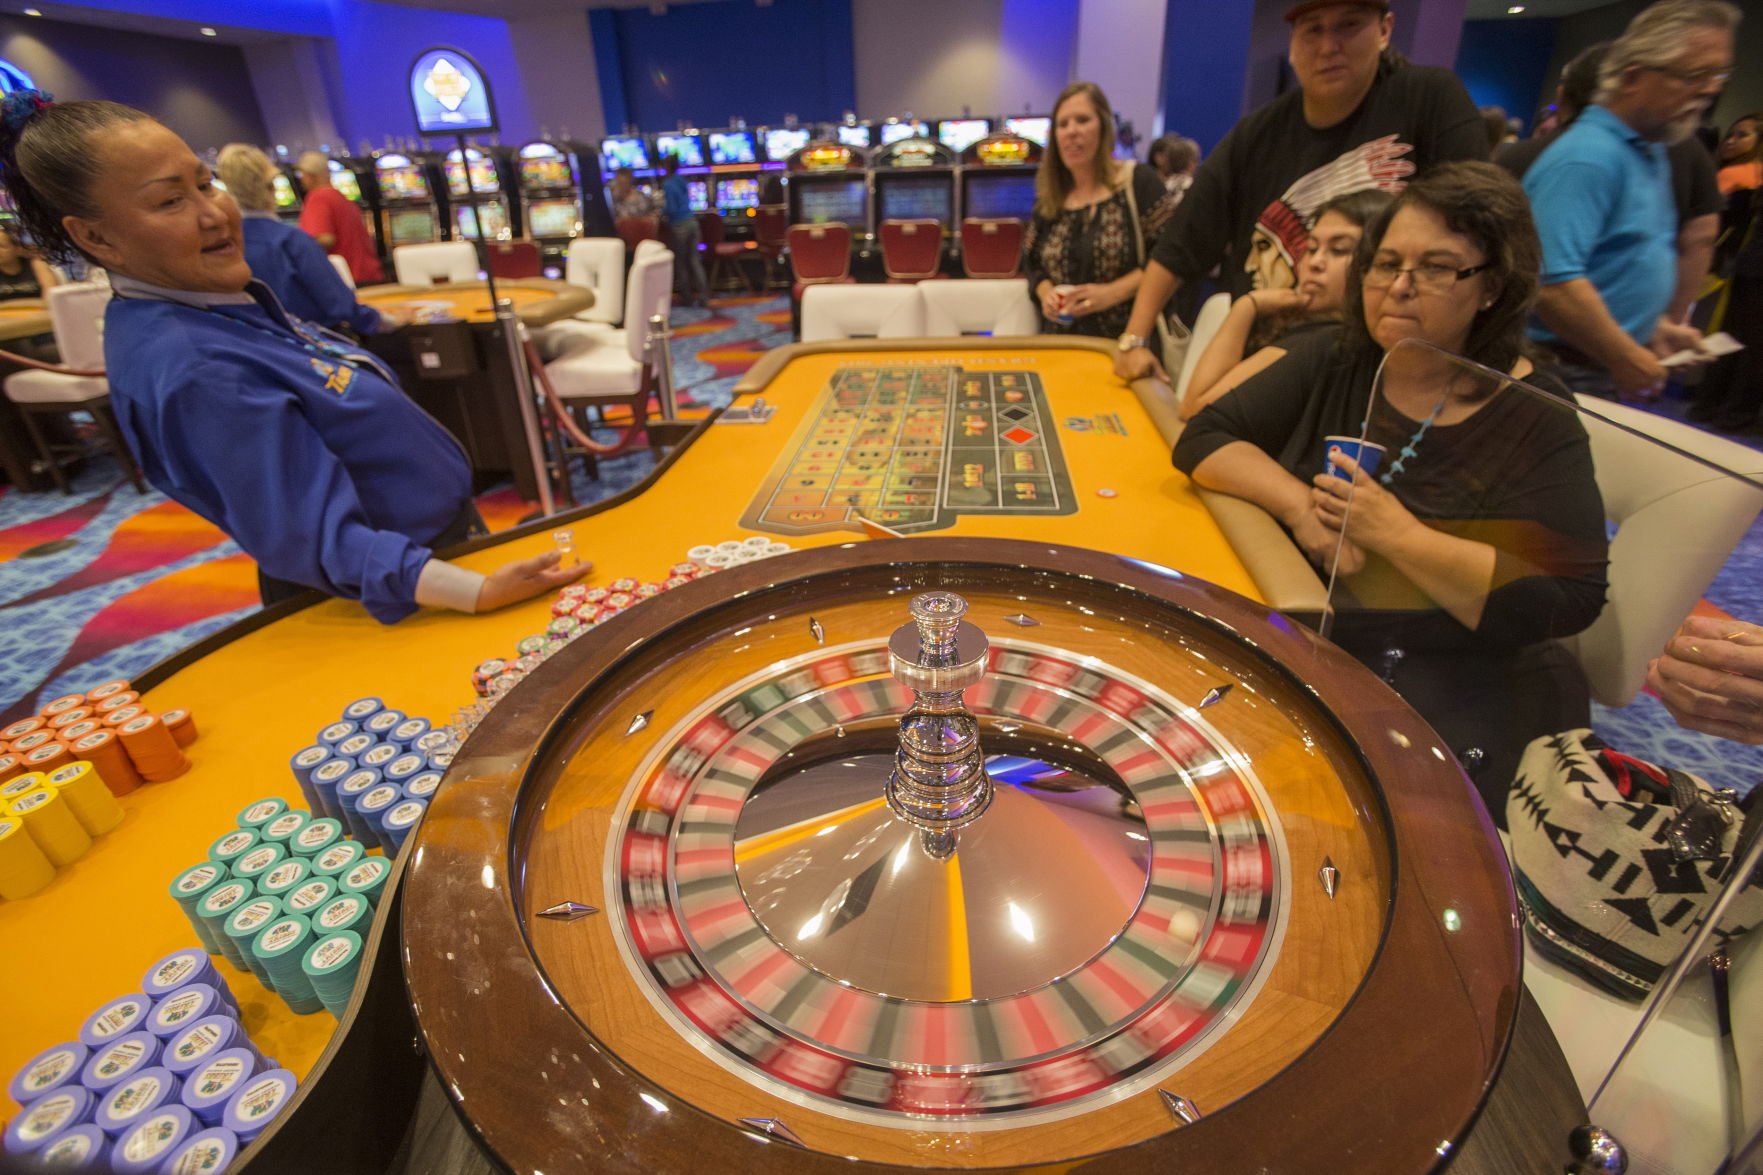 12 tribes casino in omak washington